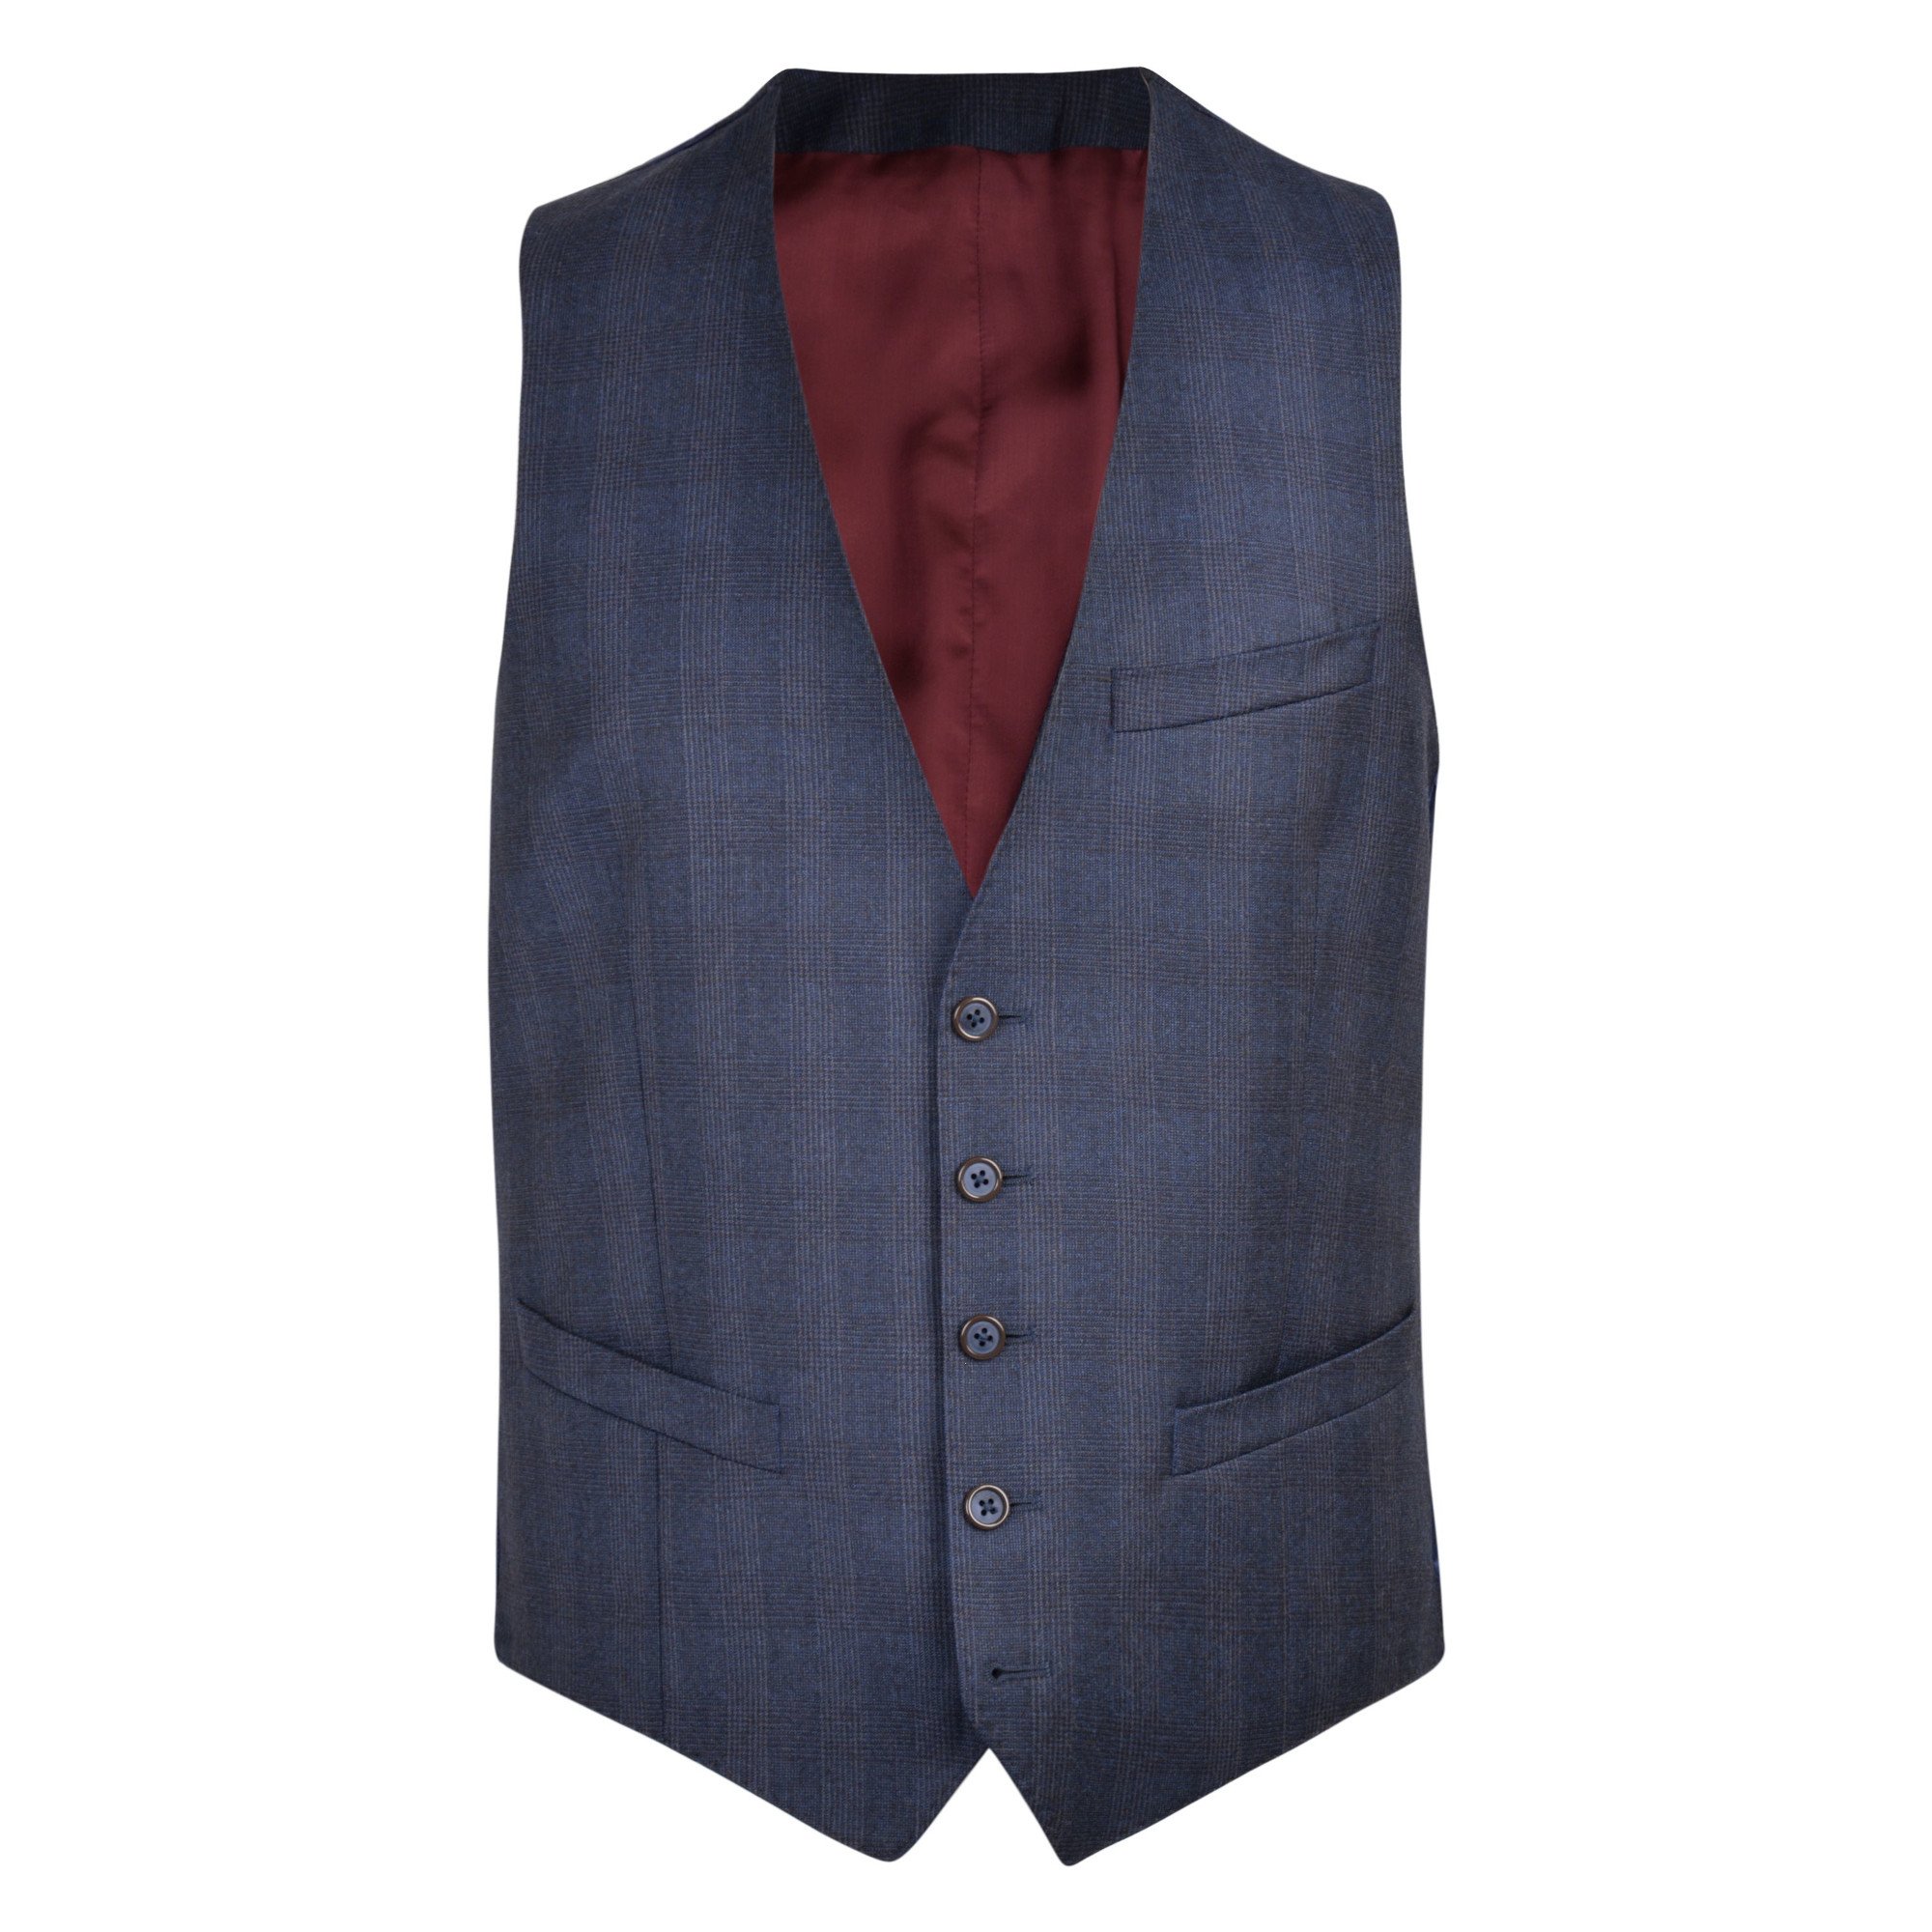 Finn Suit Waistcoat